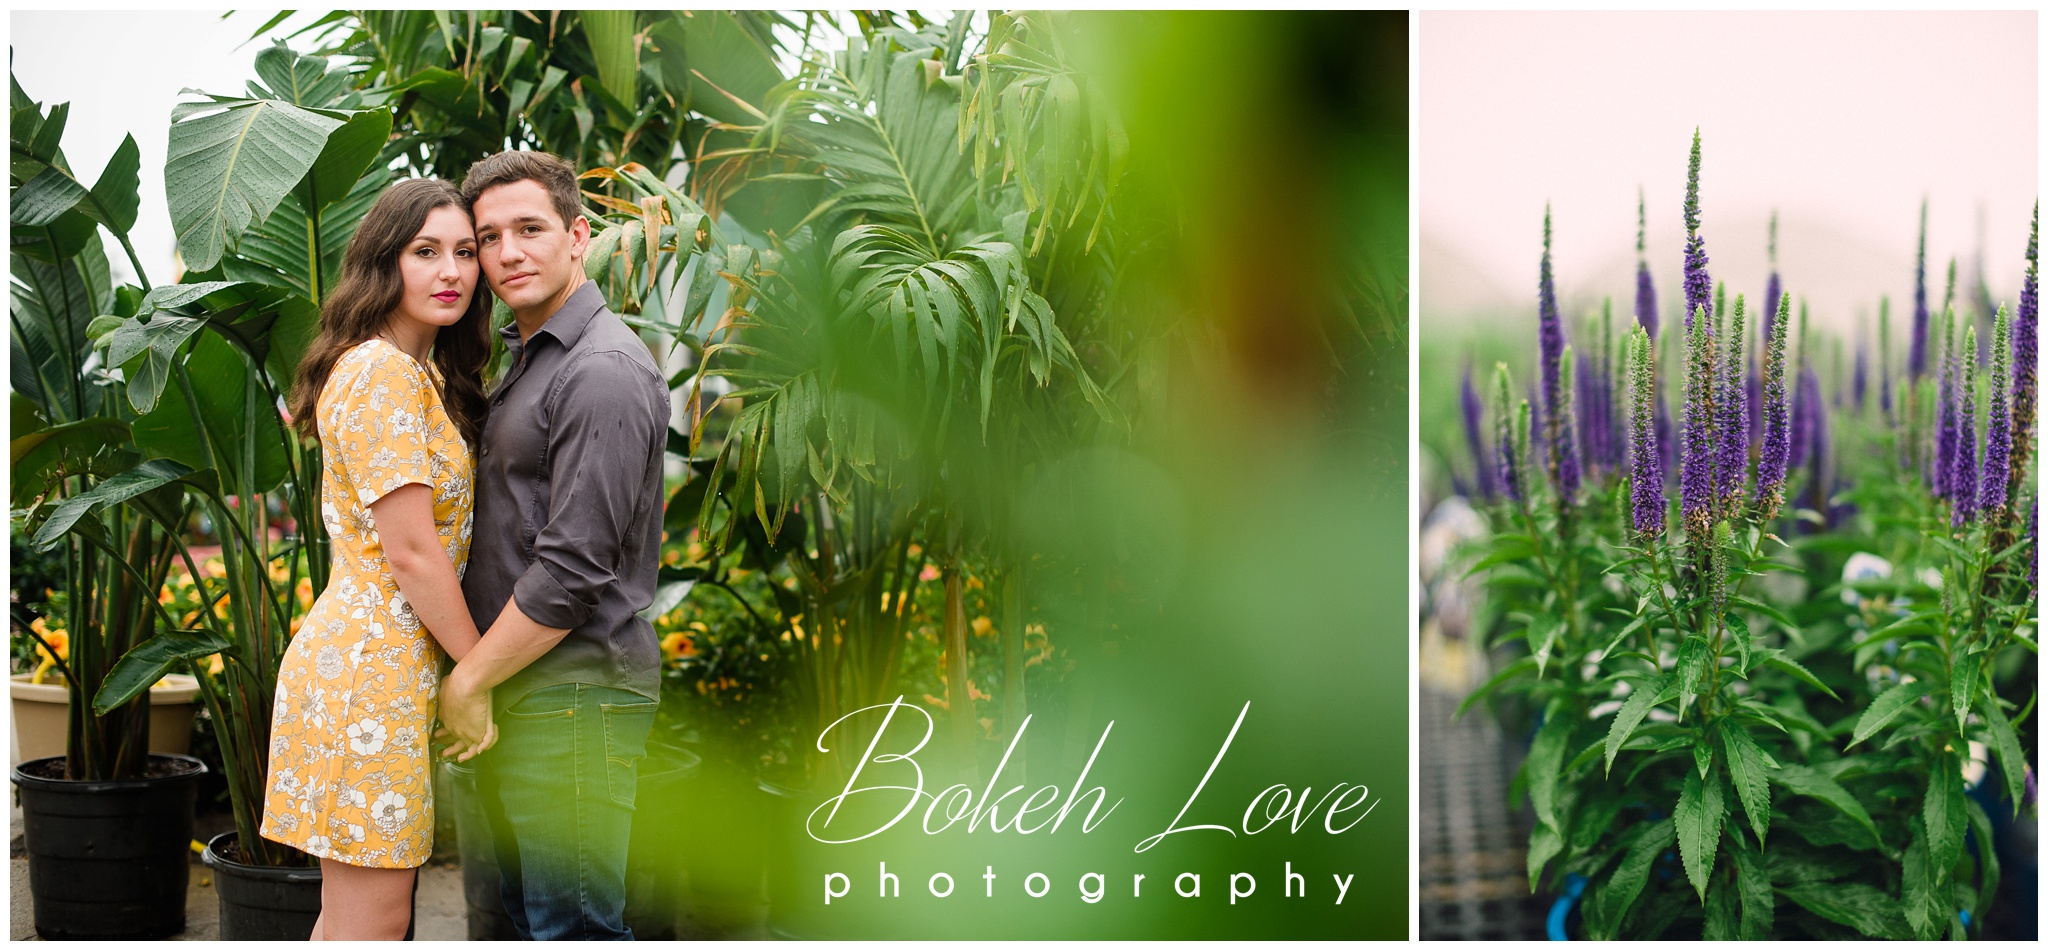 Bokeh_Love_Photography_Galloway_Professional_Photographer_4266.jpg